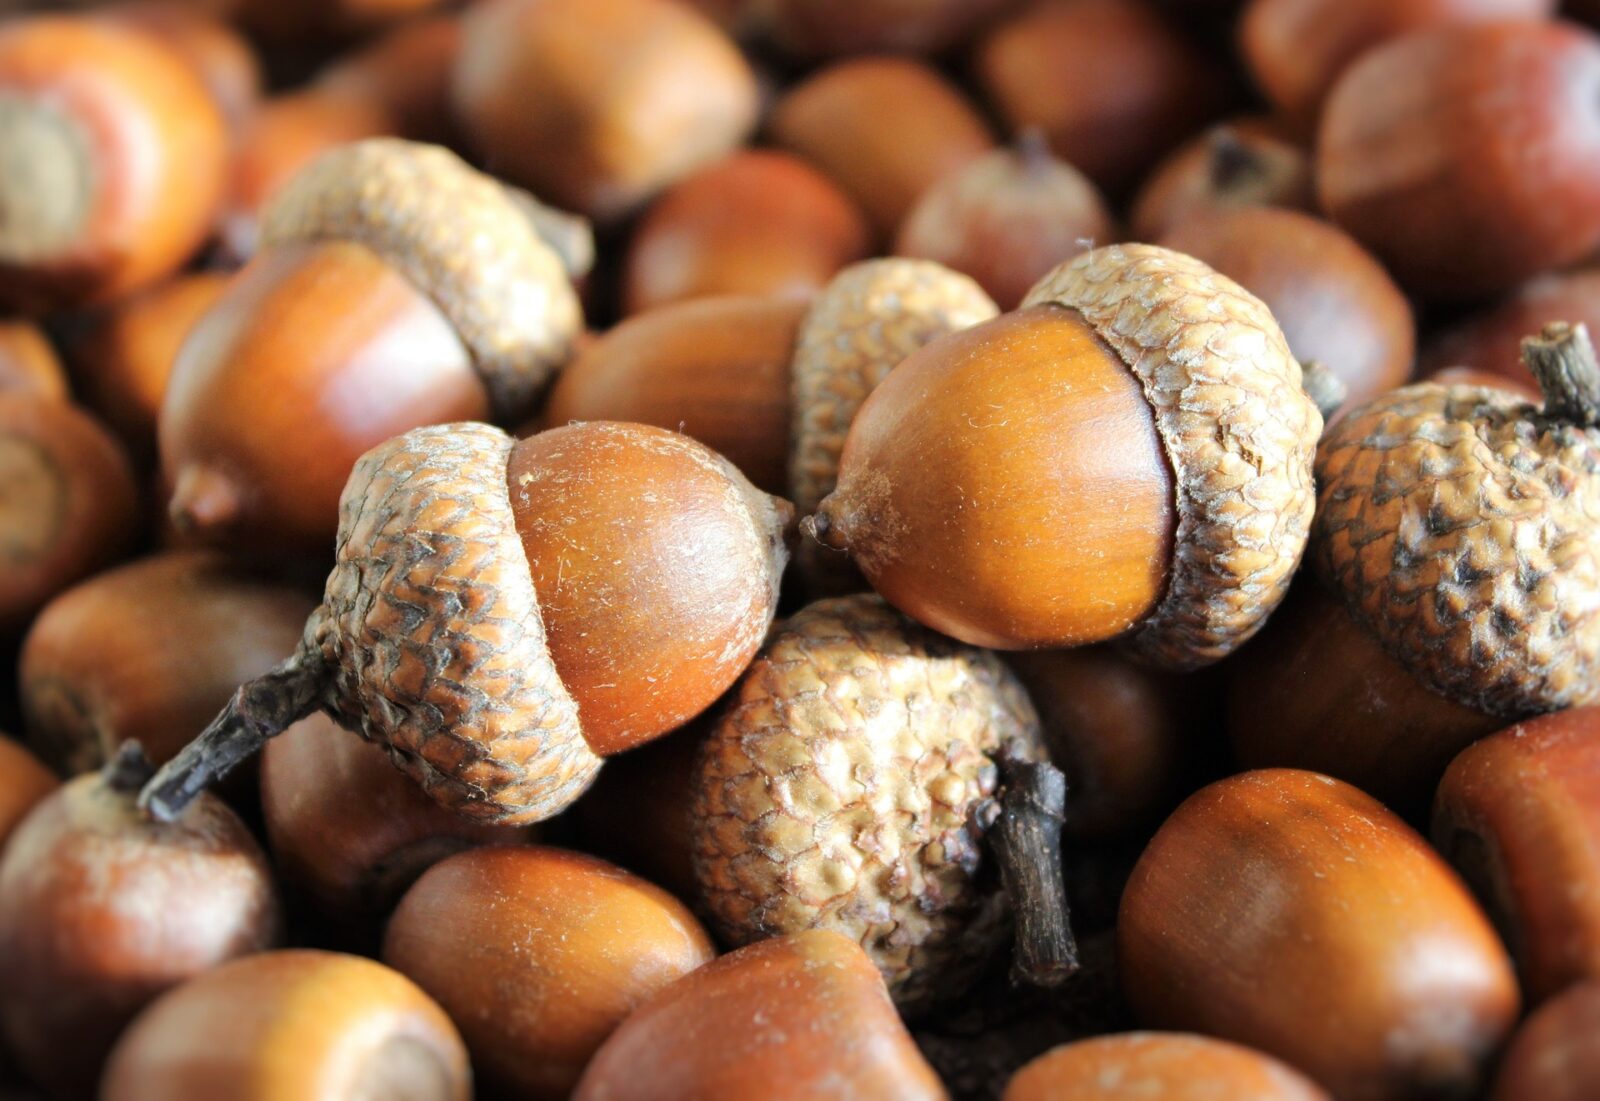 acorn tree care reviews